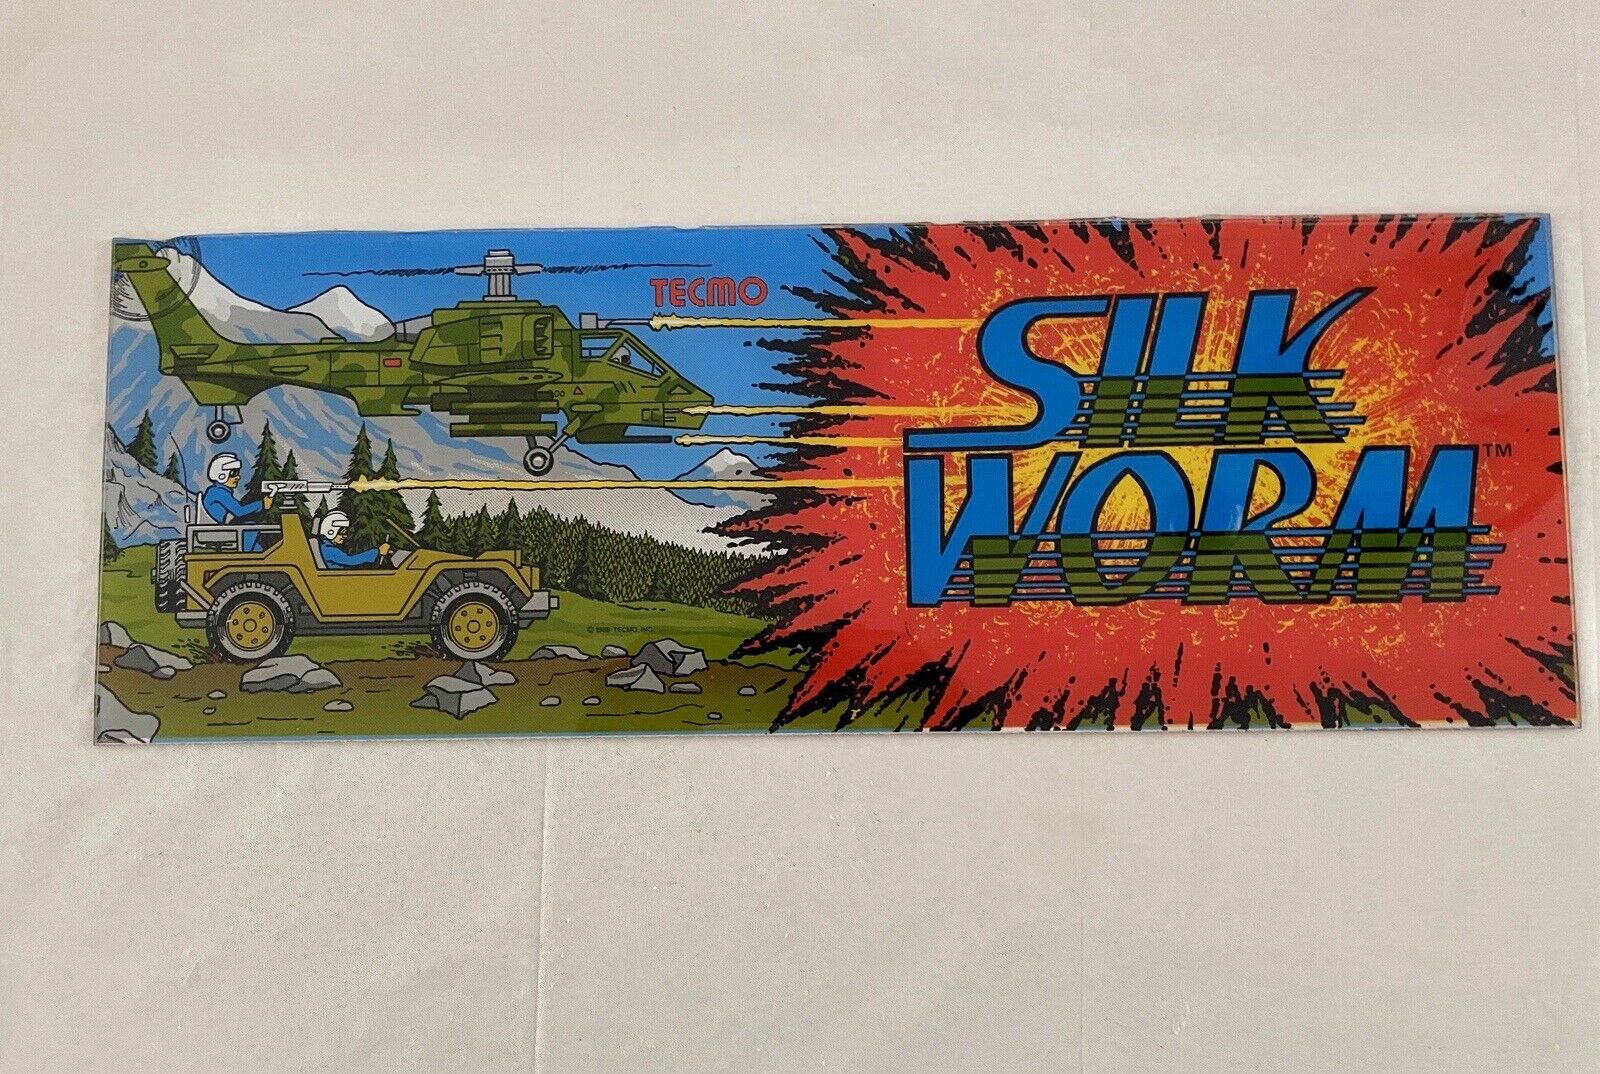 Vintage Silk Worm arcade plexi marquee panel 1980's. - 23” x 8” - Great Graphics